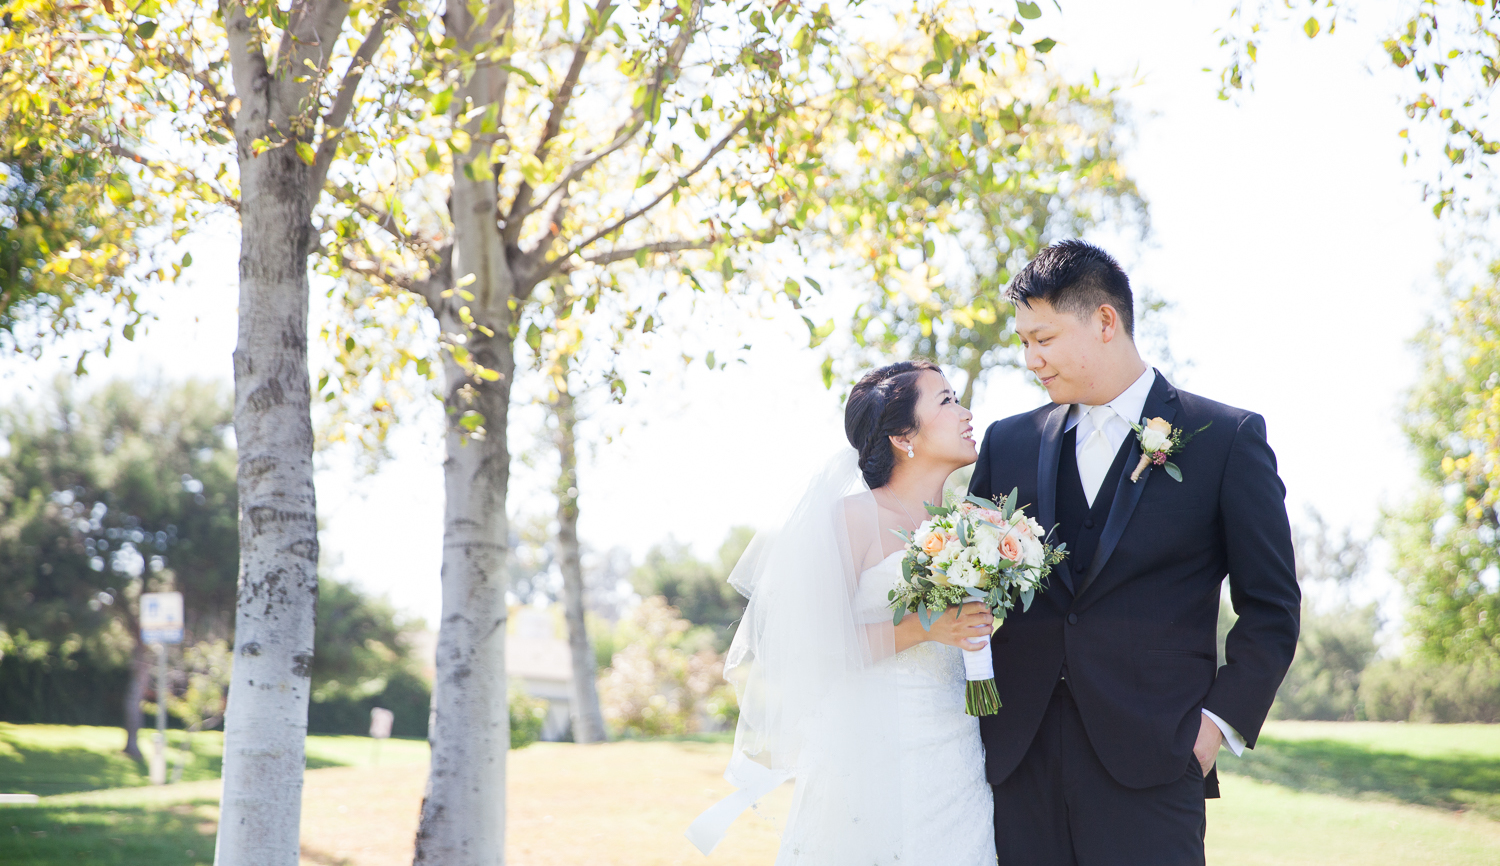 Eric & Emmeline’s Wedding | Irvine Presbyterian Church & Turnip Rose Celebrations, CA